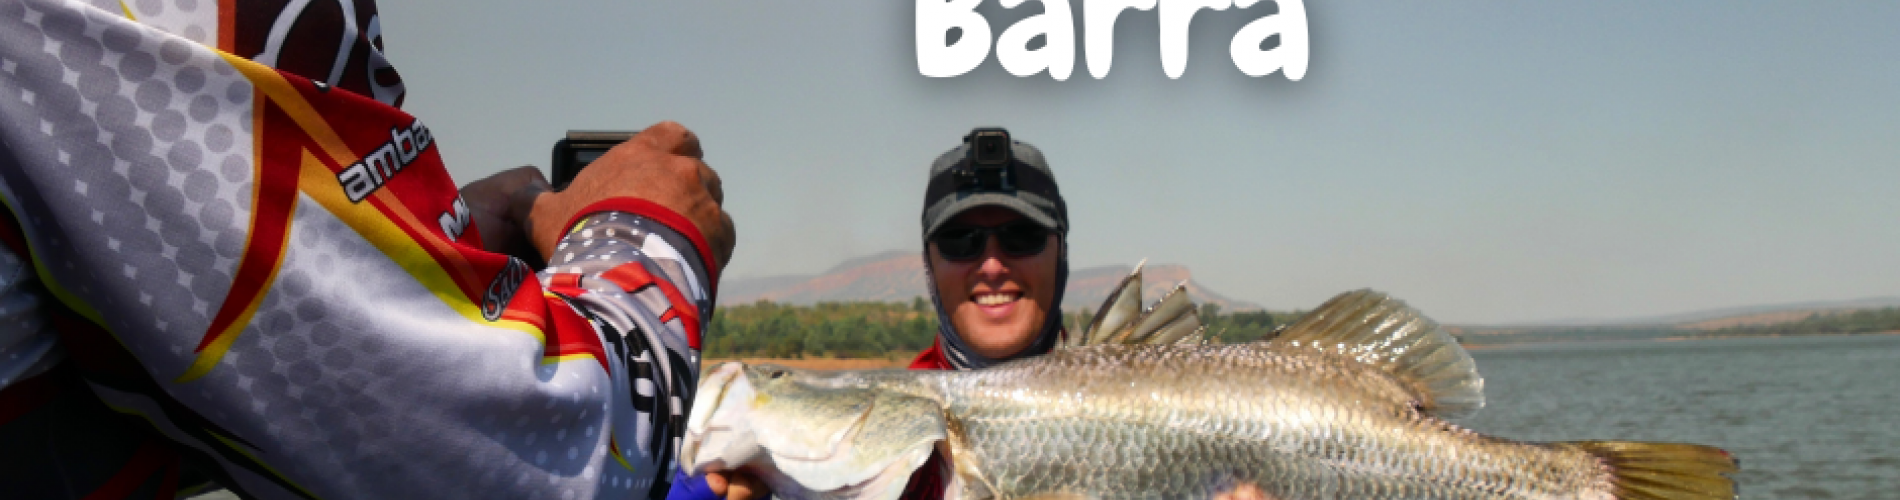 Barra Fishing in the Kimberley